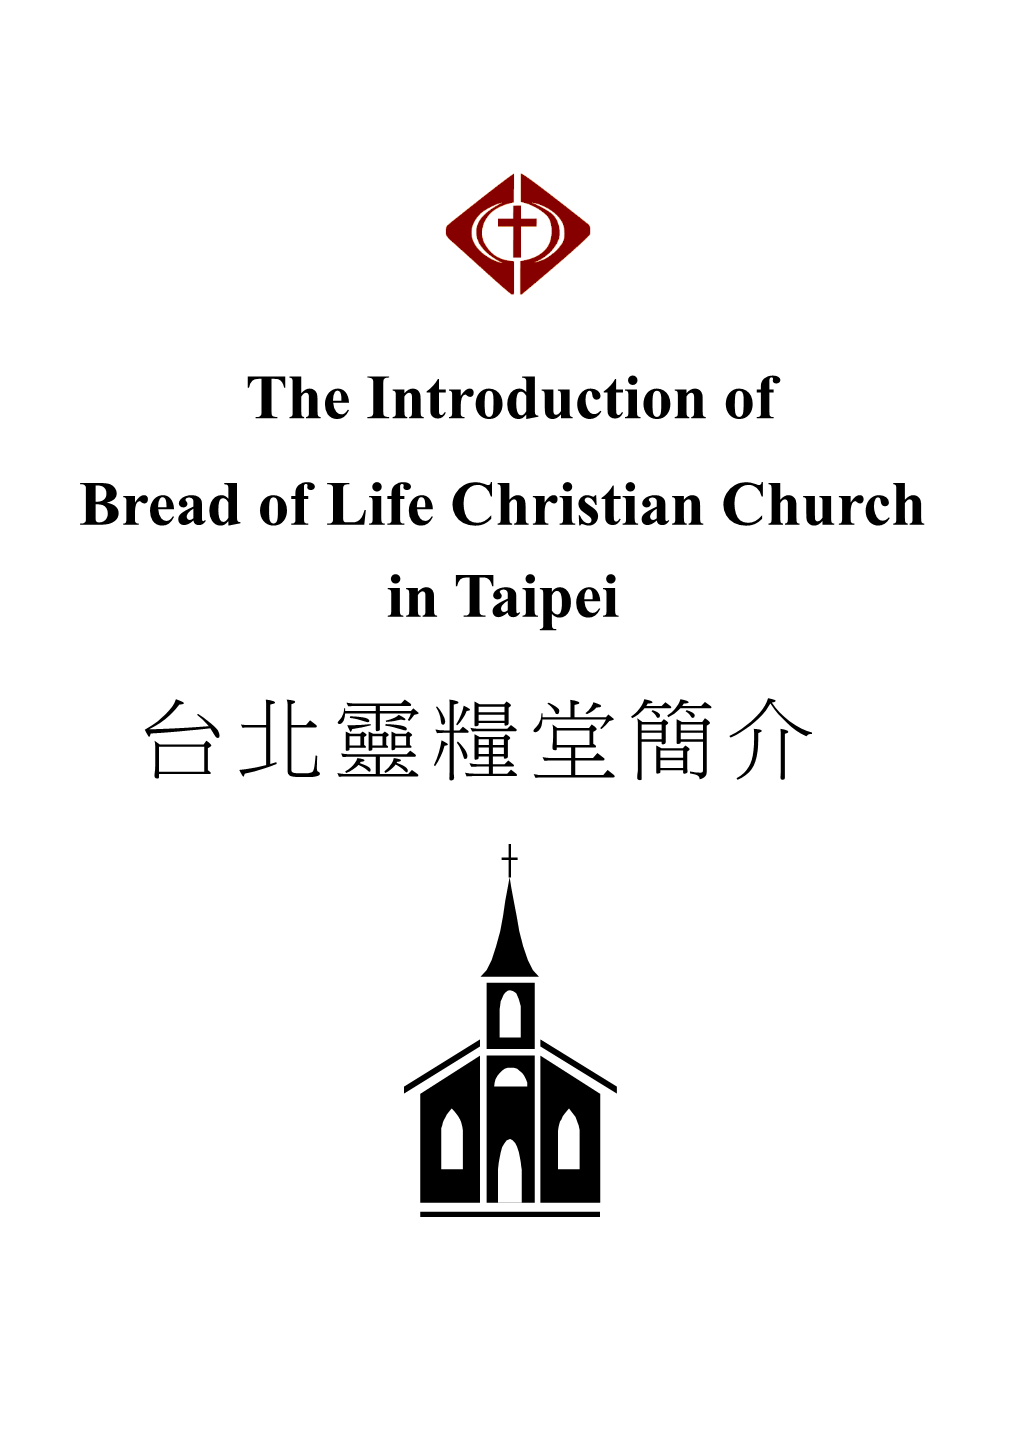 Bread of Life Christian Church in Taipei